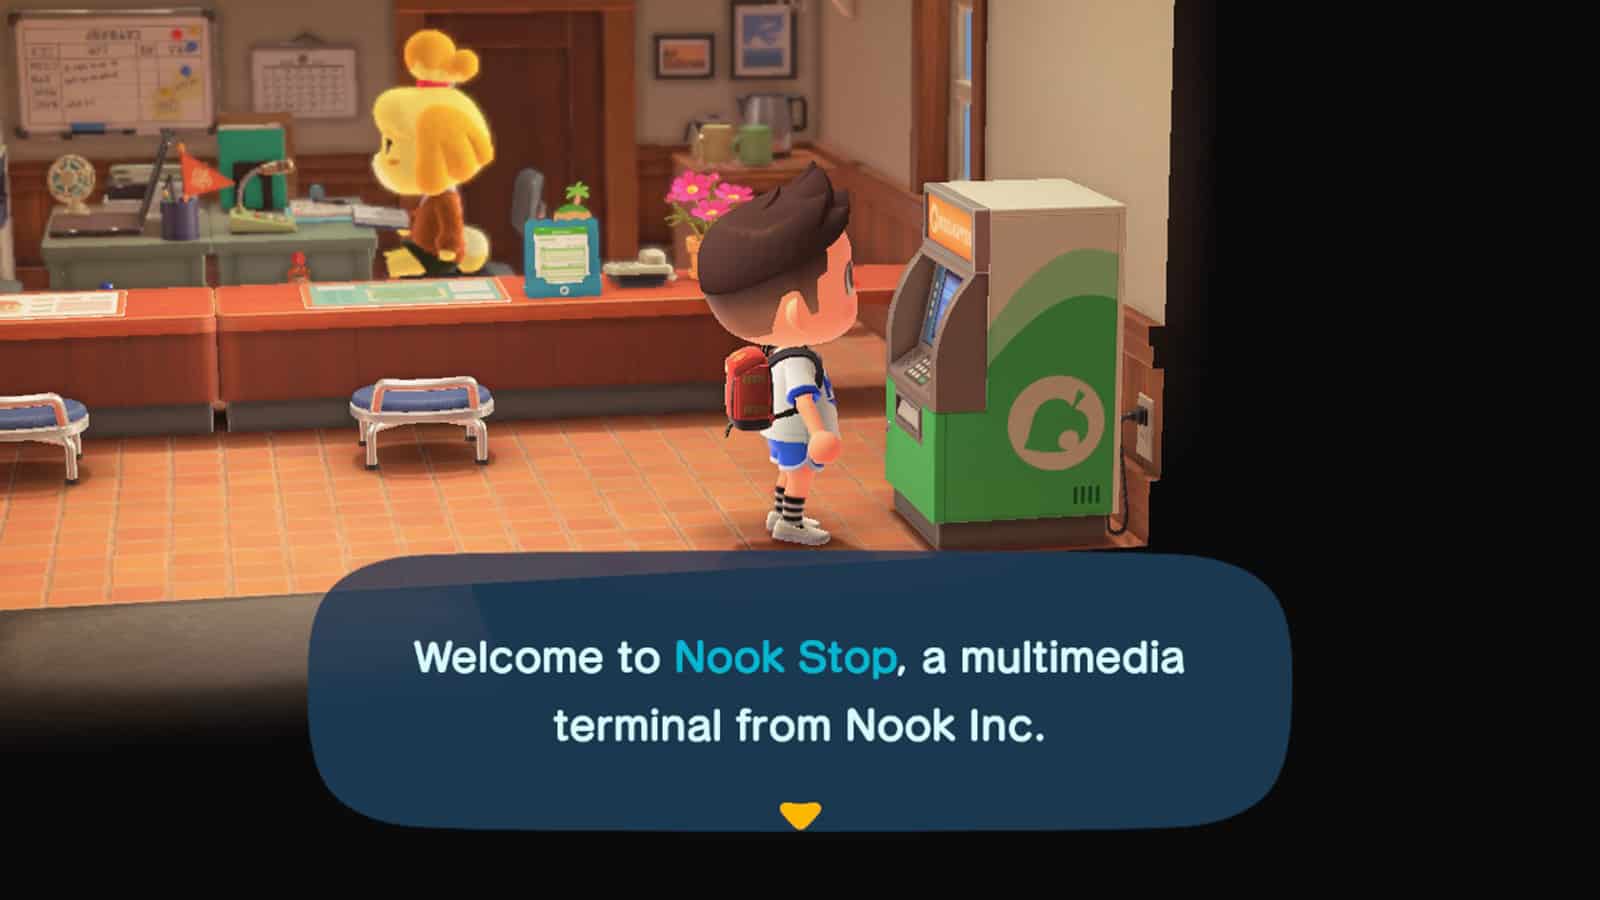 Das Nook Stop-Terminal in Animal Crossing New horizons